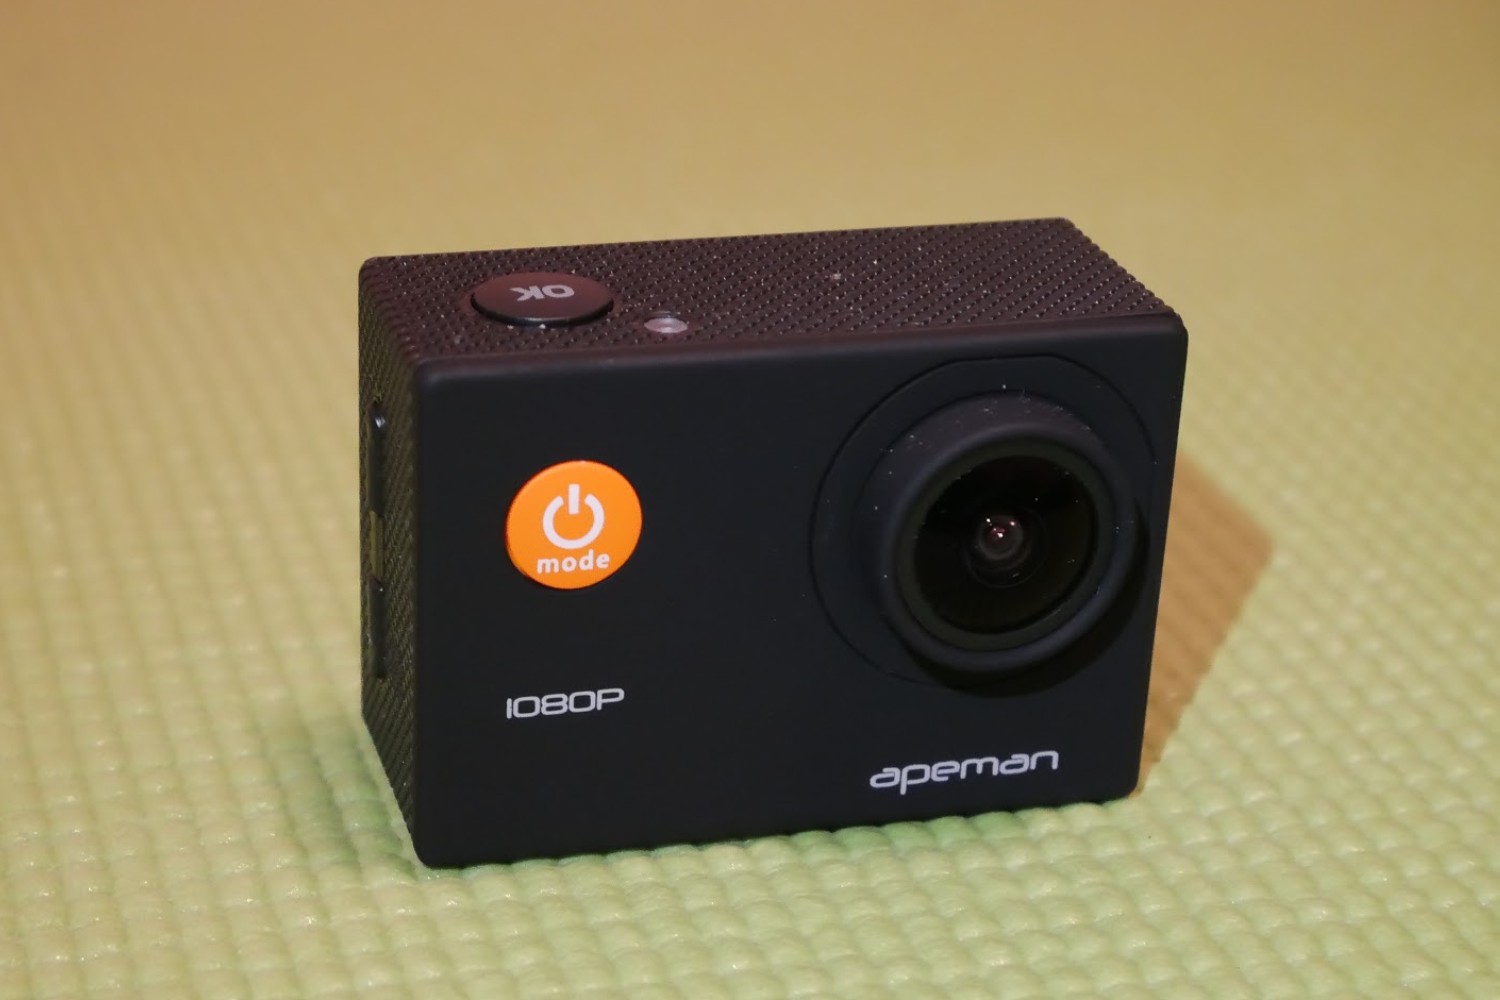 how-to-attach-an-action-camera-model-a66-apeman-to-a-gun